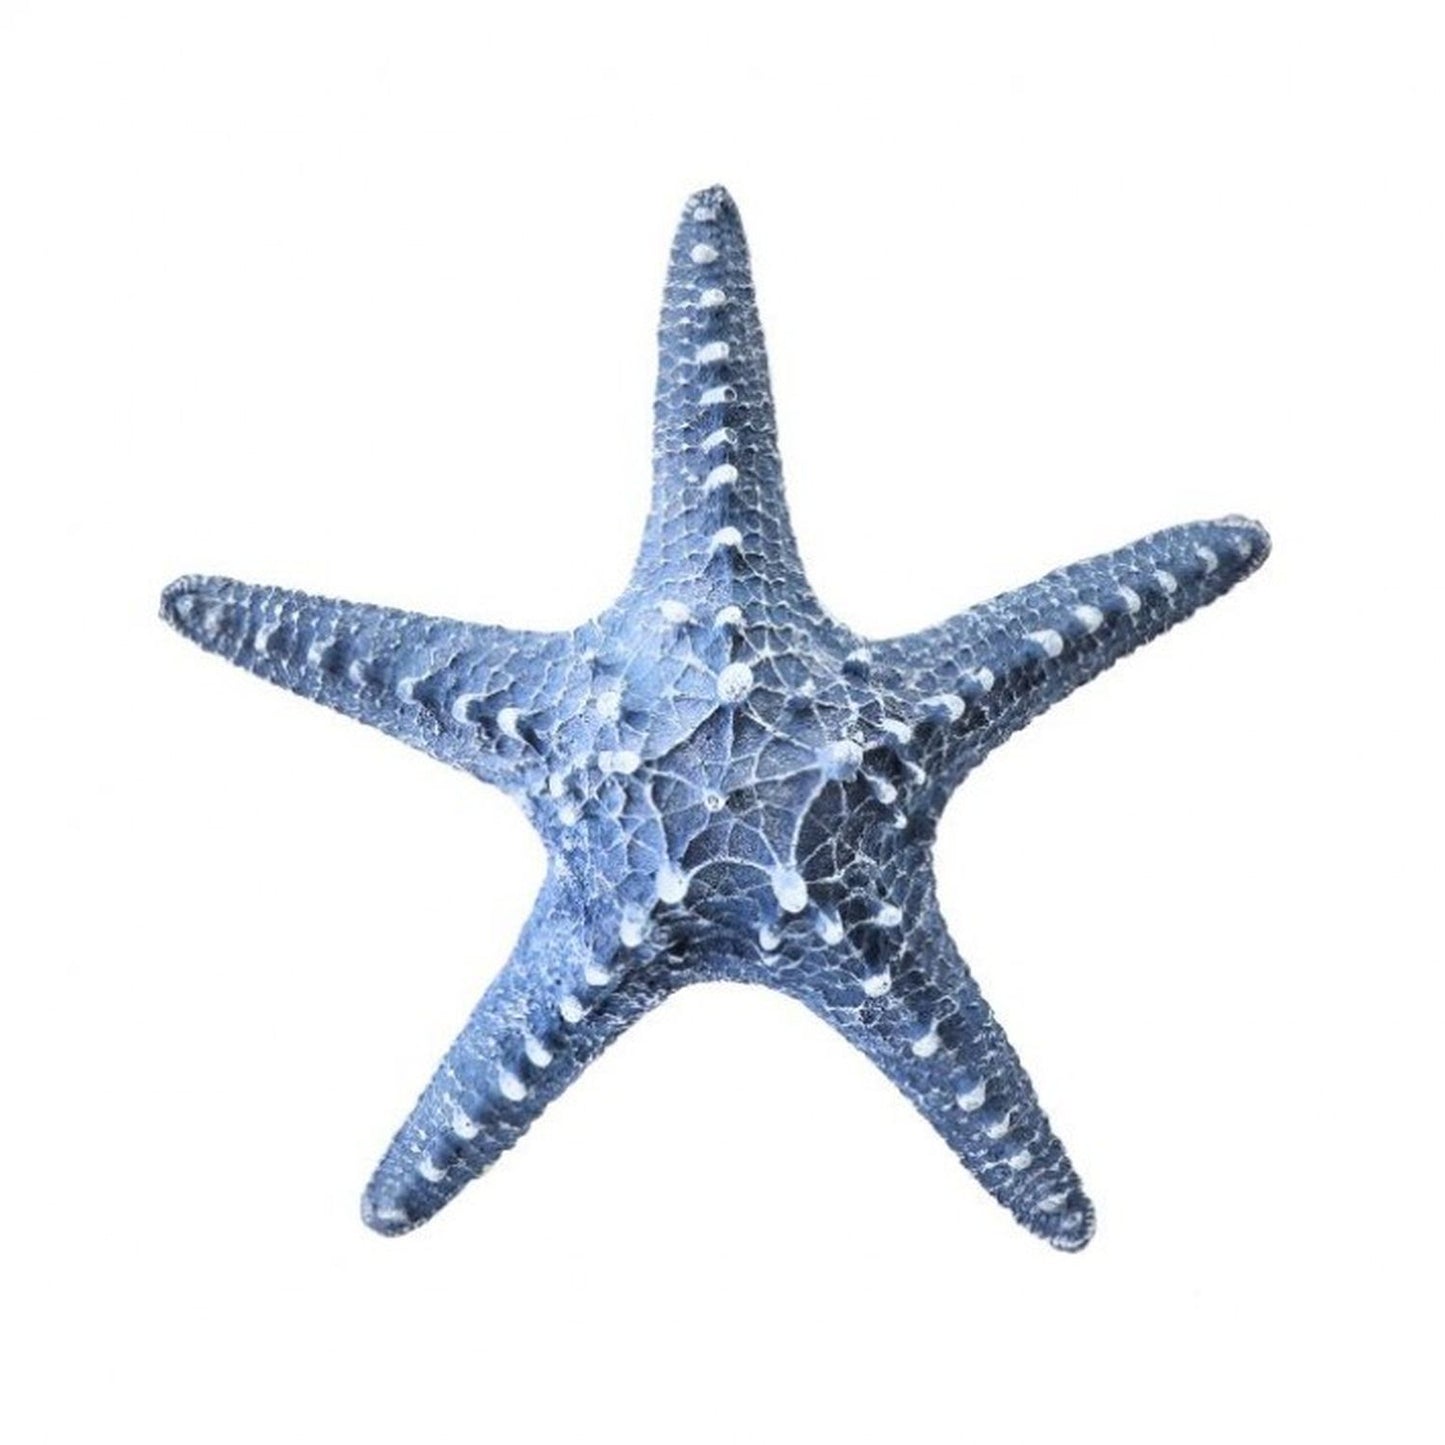 Regency International Polystone Starfish 8"